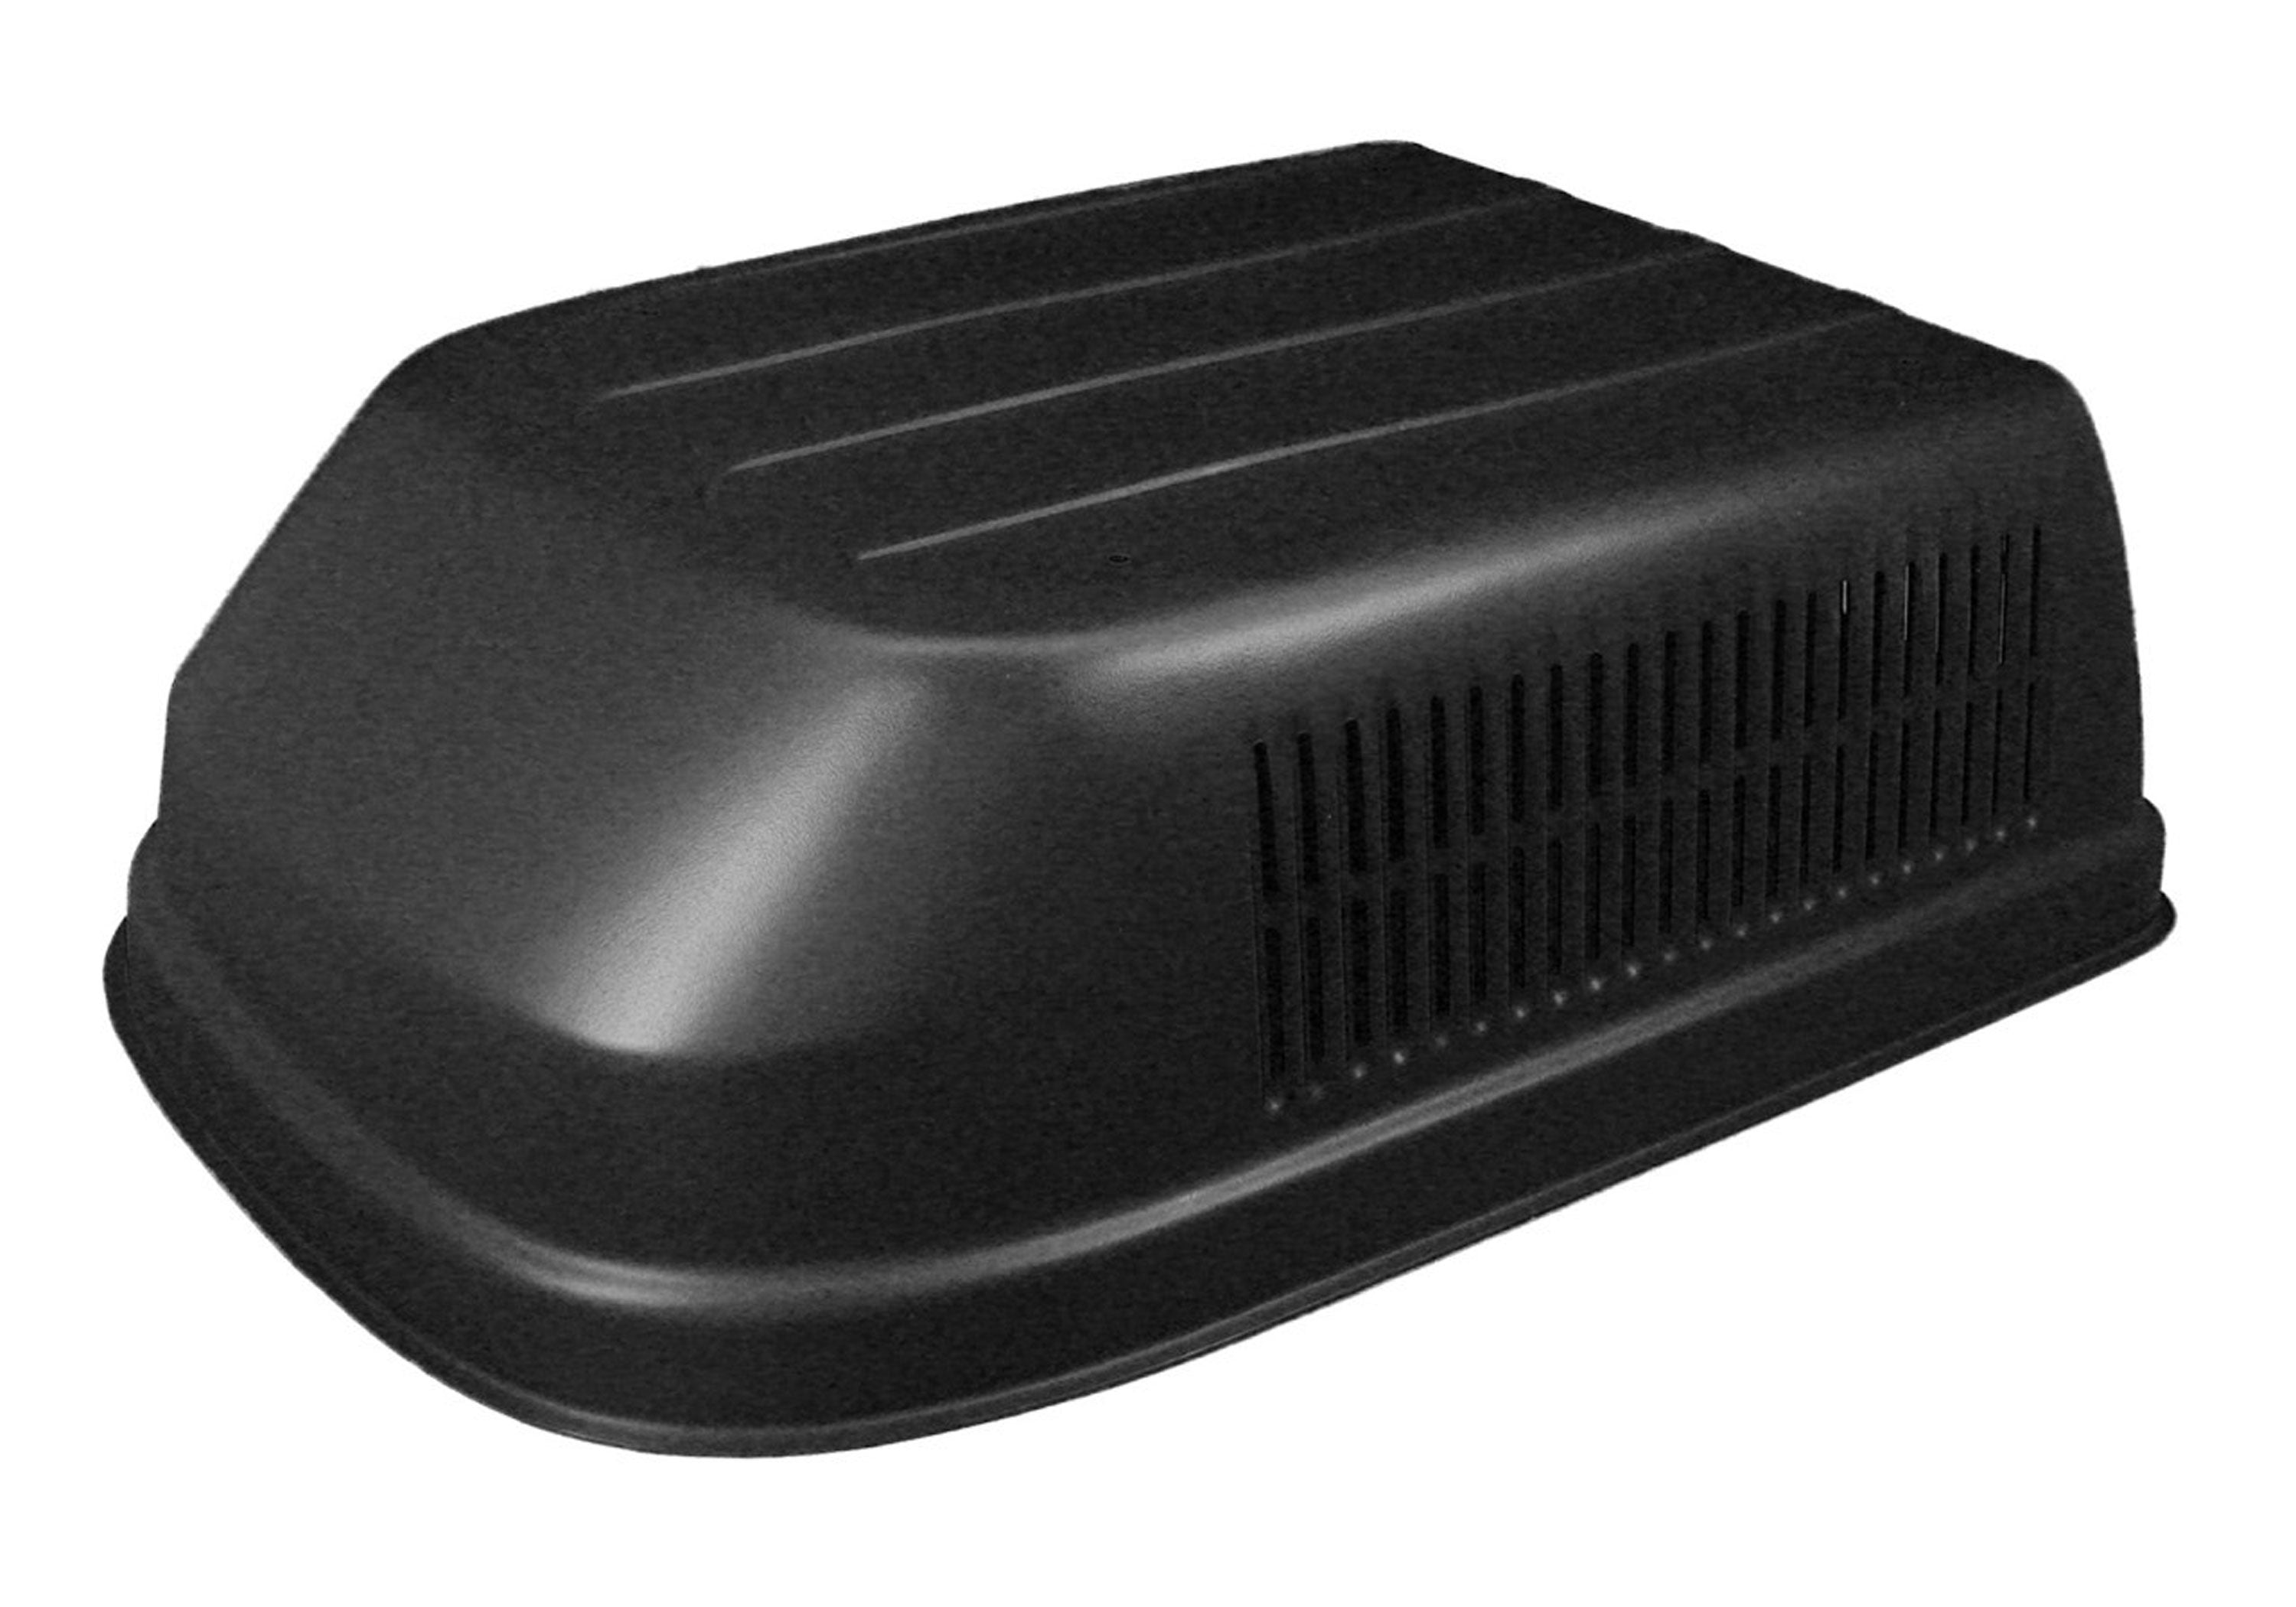 Icon 01550 Air Conditioner Shroud for Coleman - Black